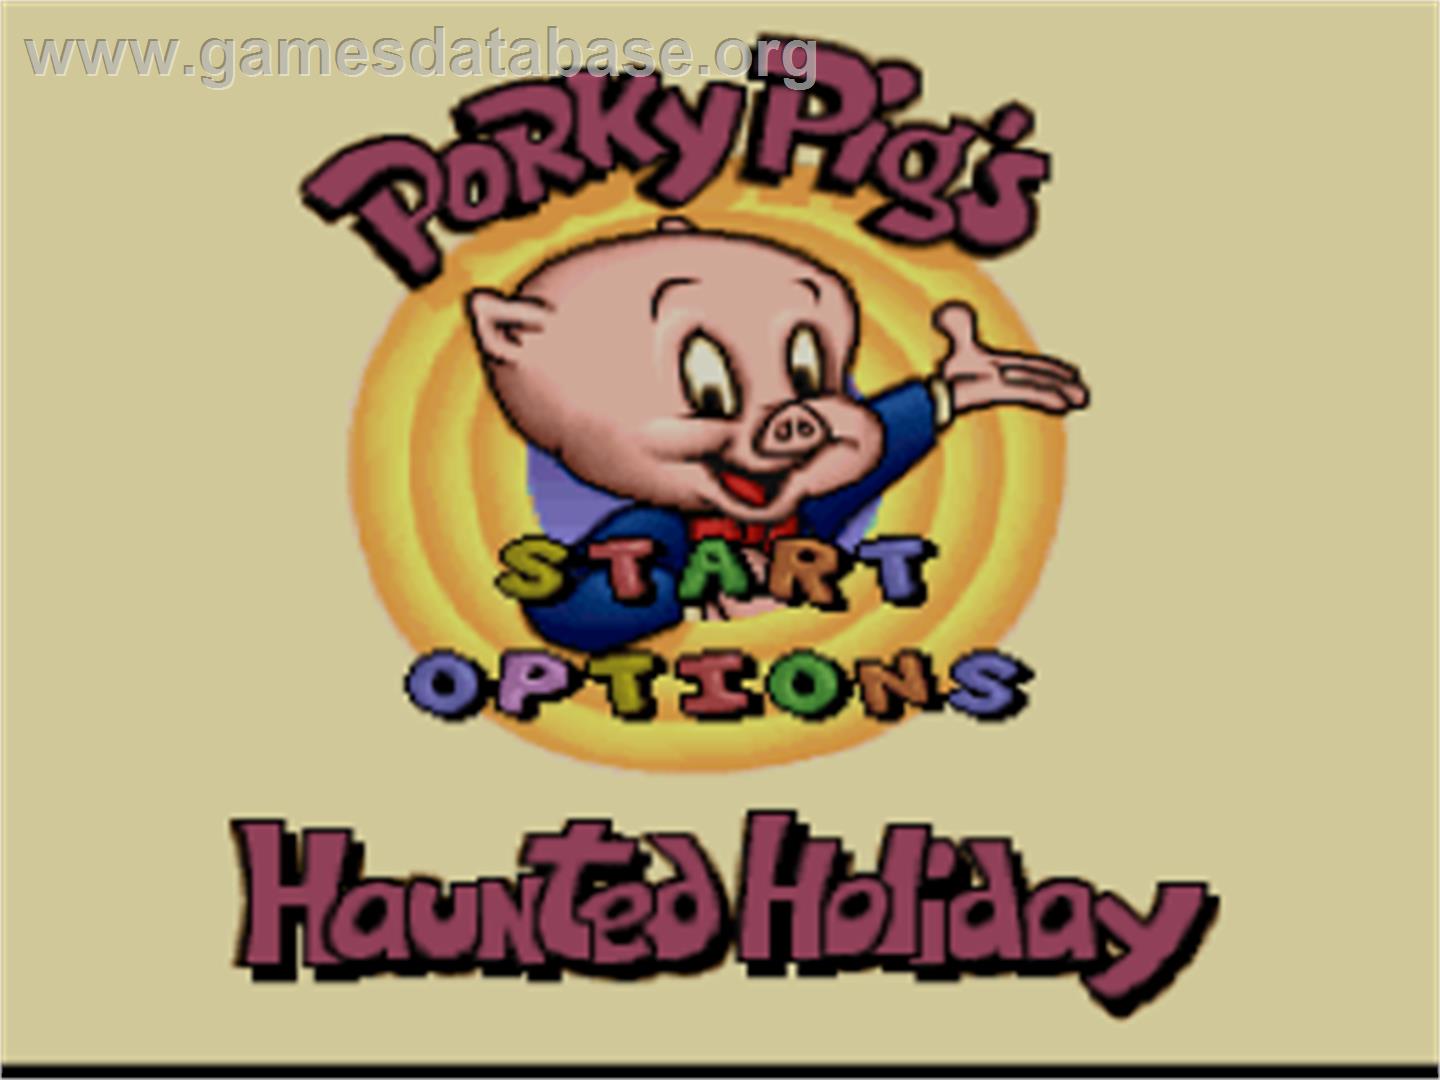 Porky Pig's Haunted Holiday - Nintendo SNES - Artwork - Title Screen